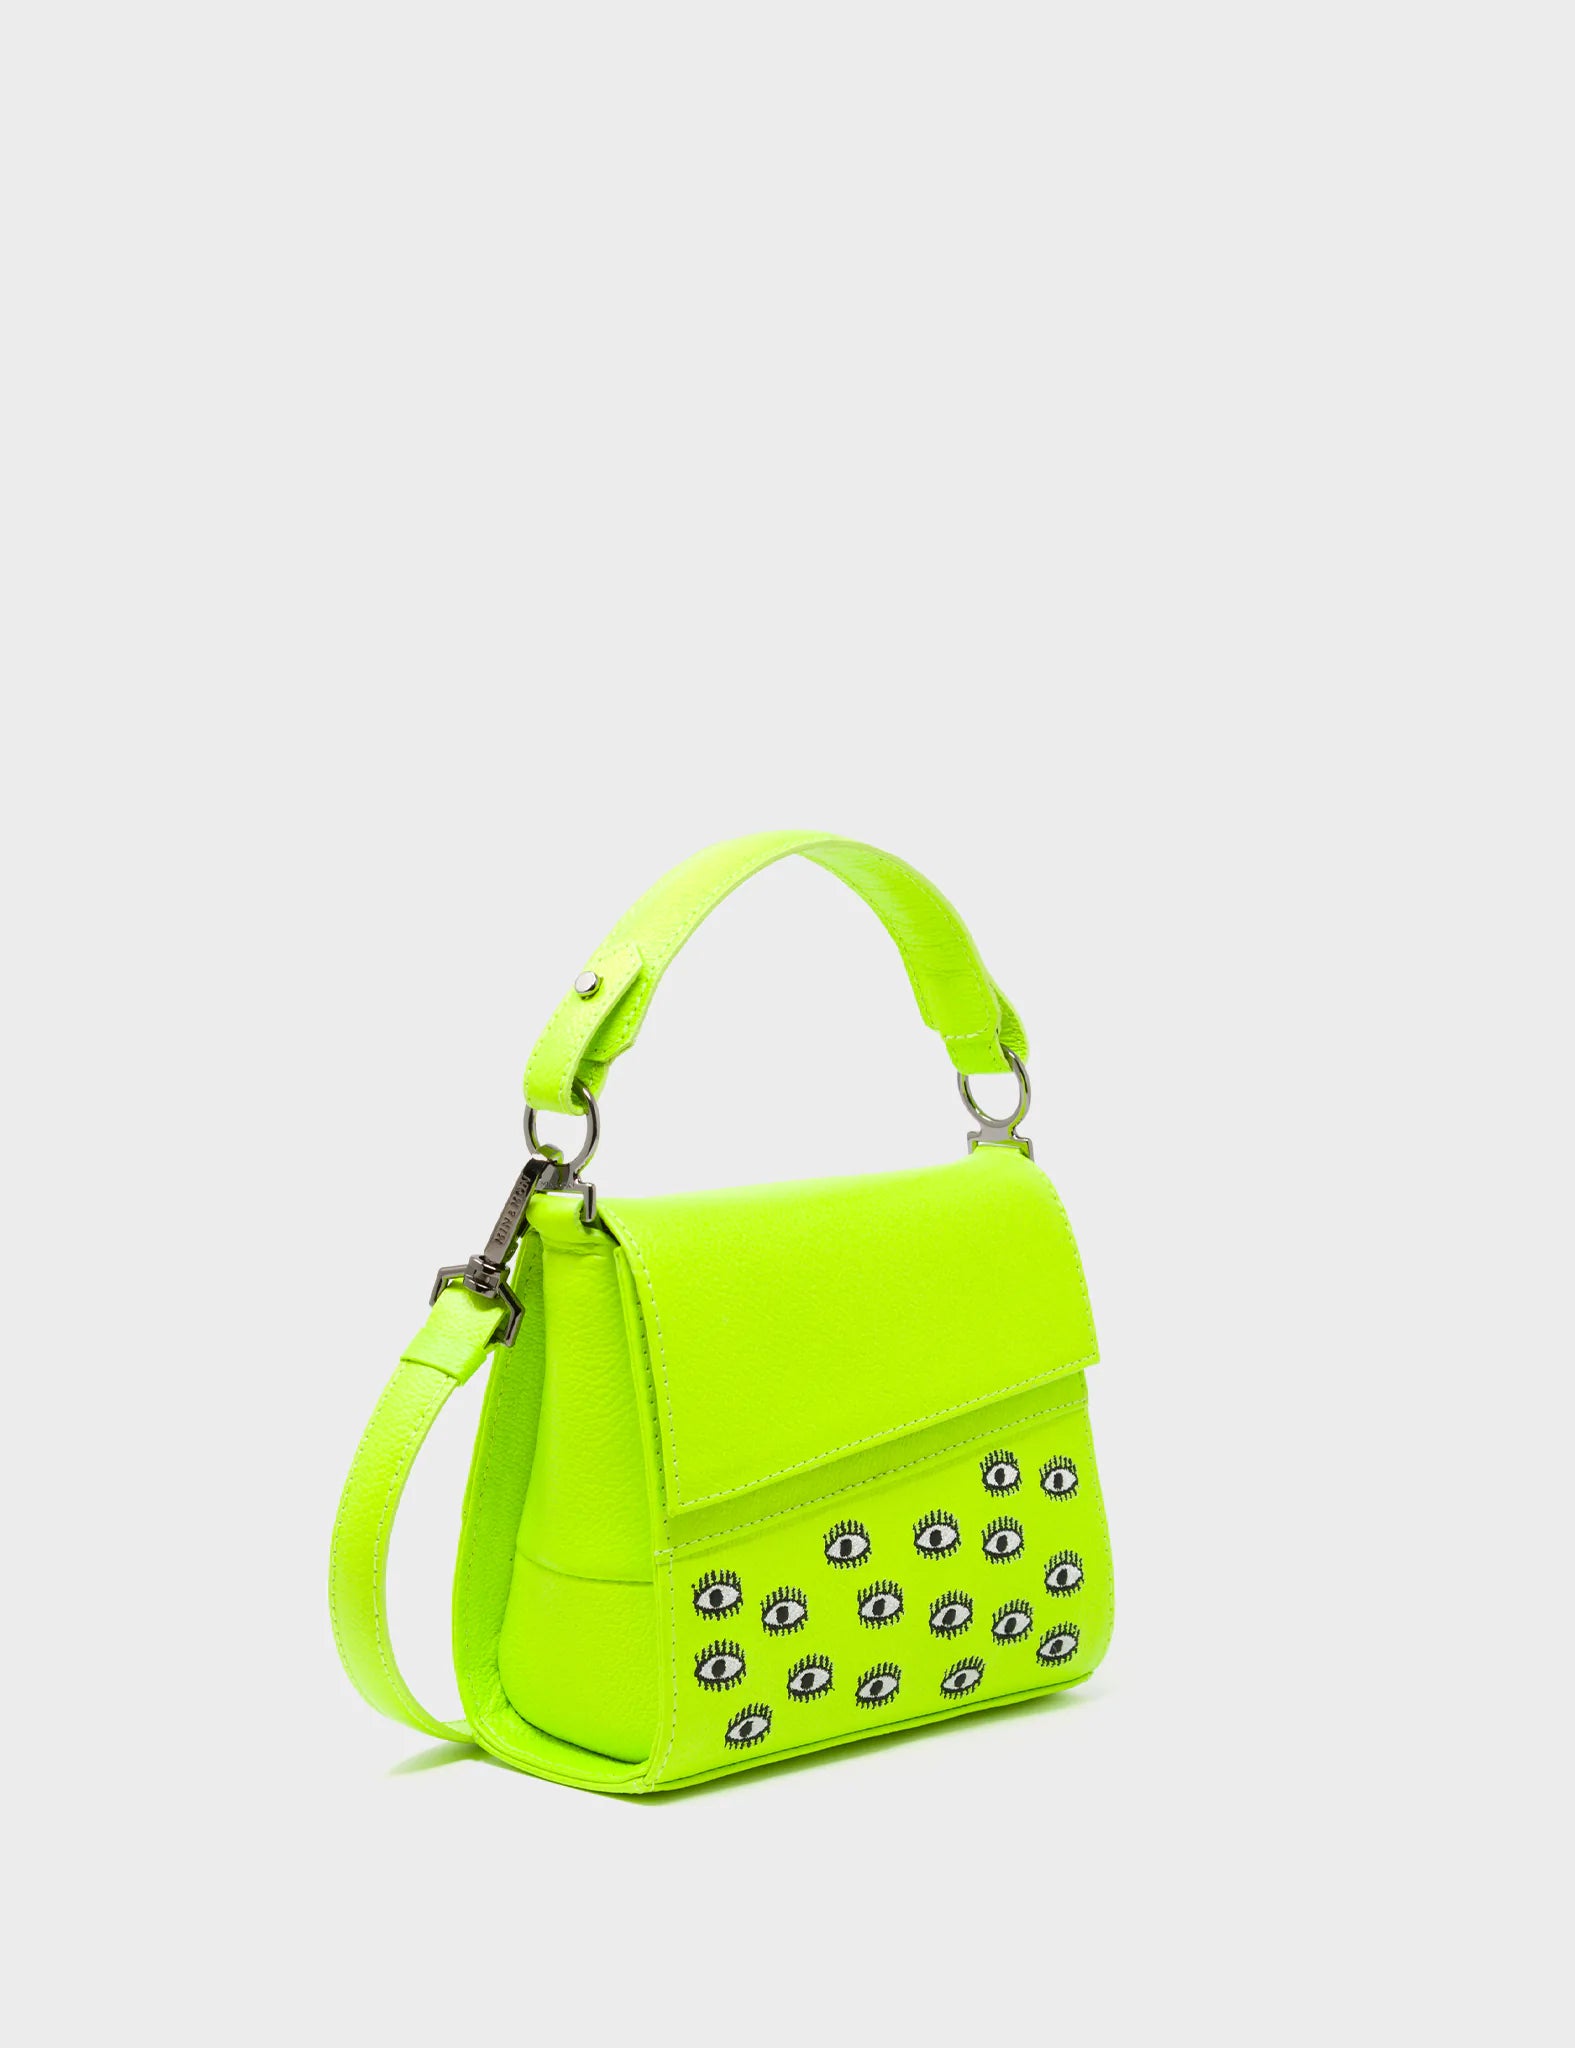 Anastasio Micro Crossbody Handbag Neon Yellow Leather - Eyes Embroidery